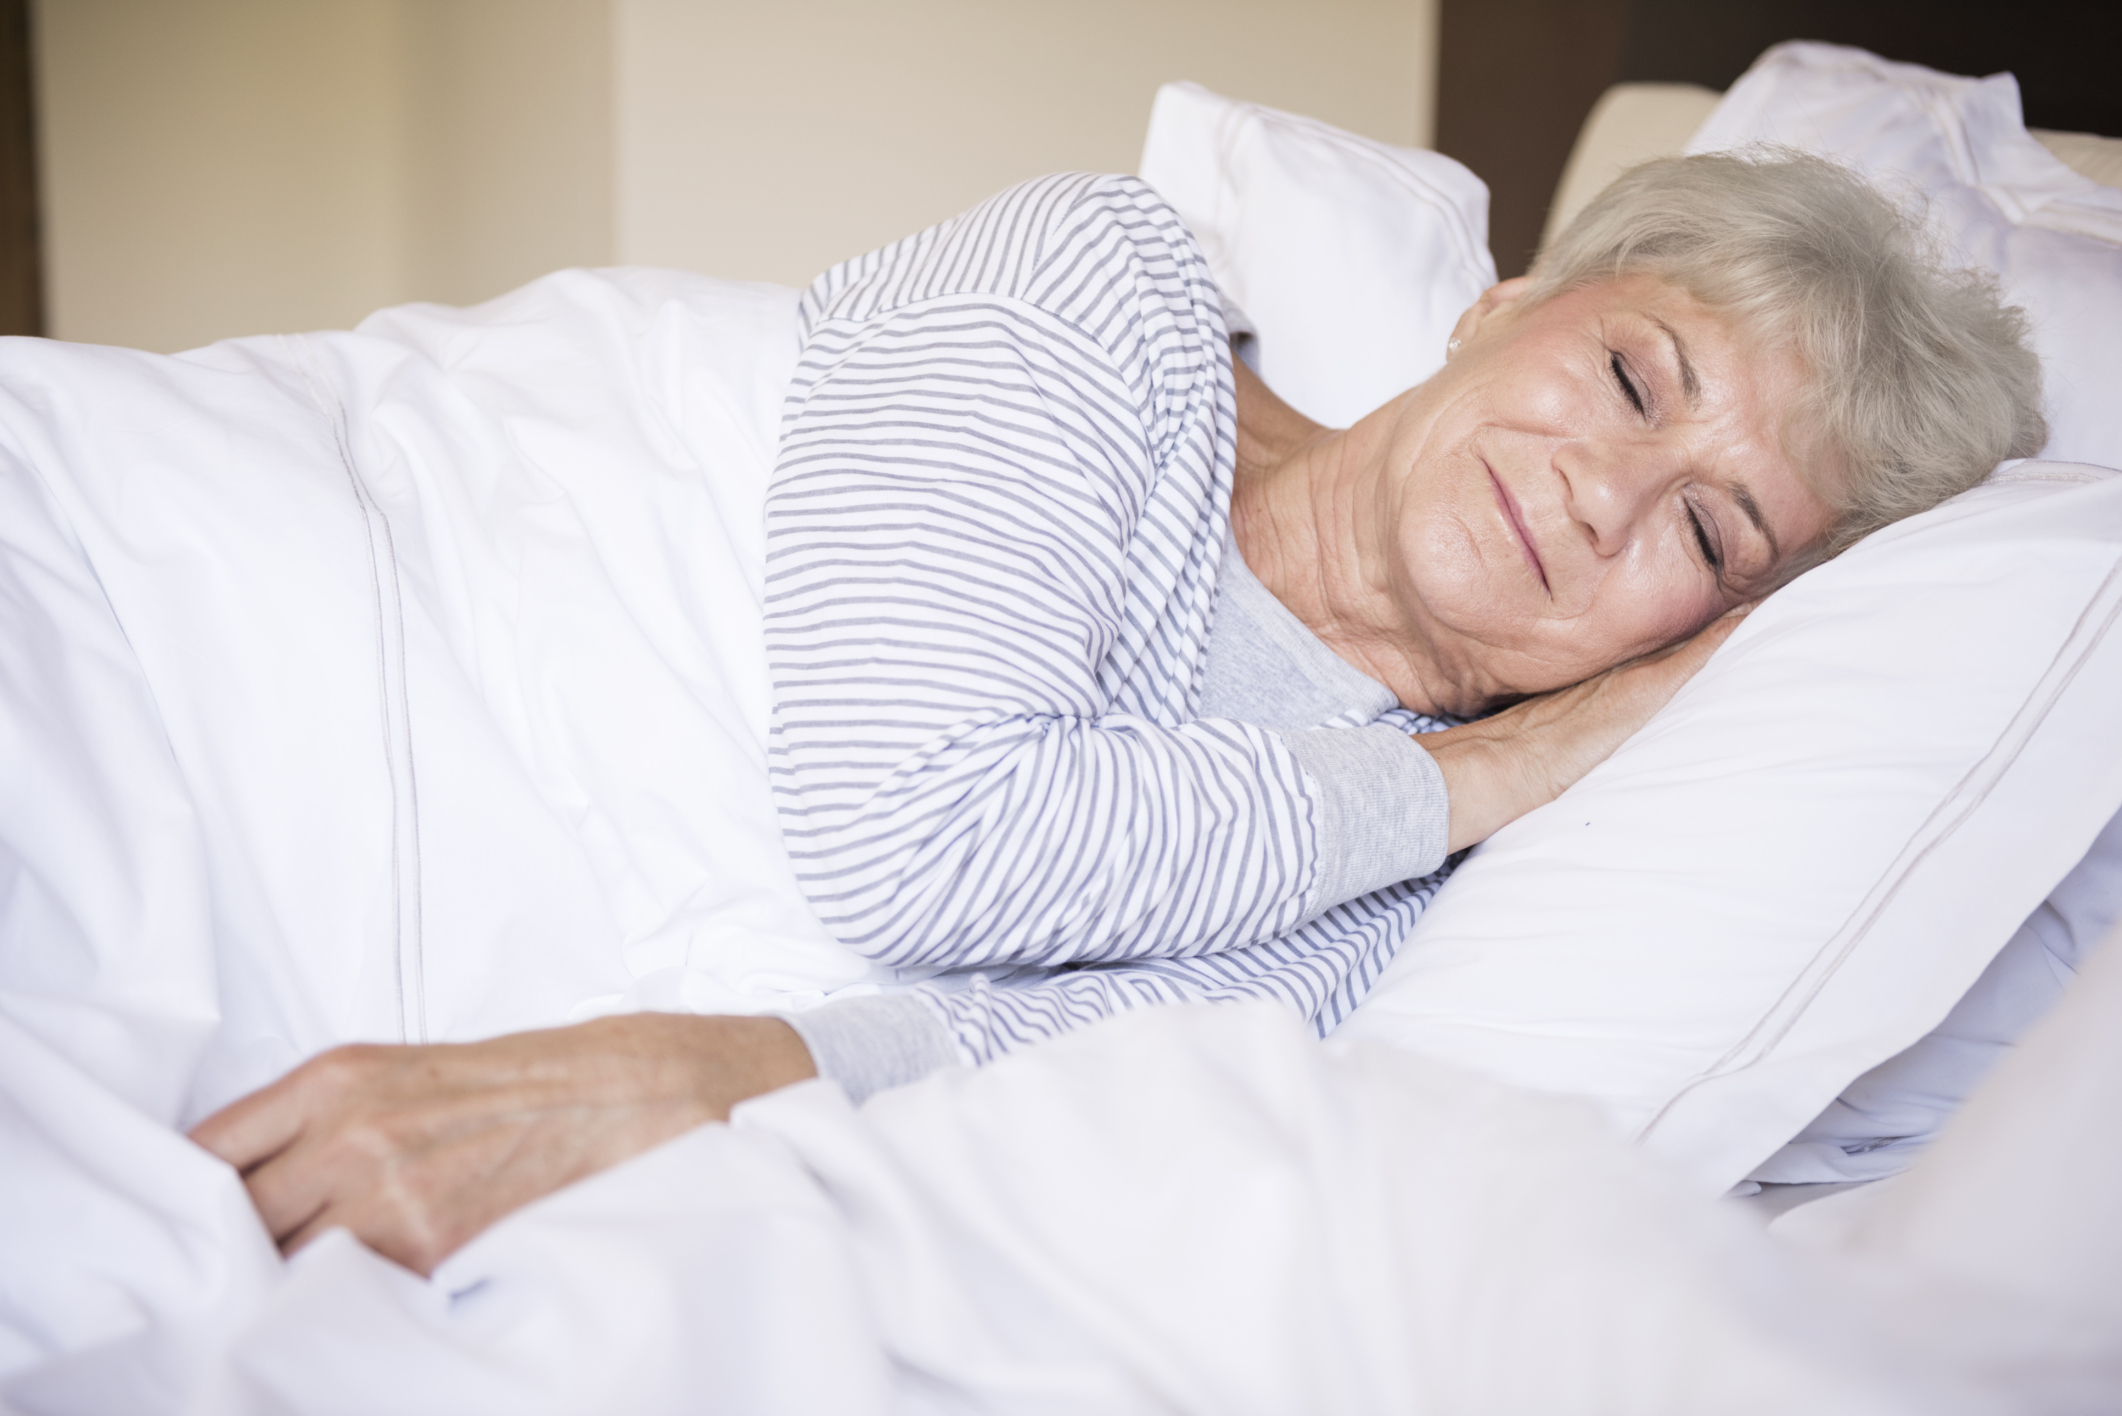 eHealth_Aug 6 2015_news _sleeping on side reduces alzheimers risk_yaneff